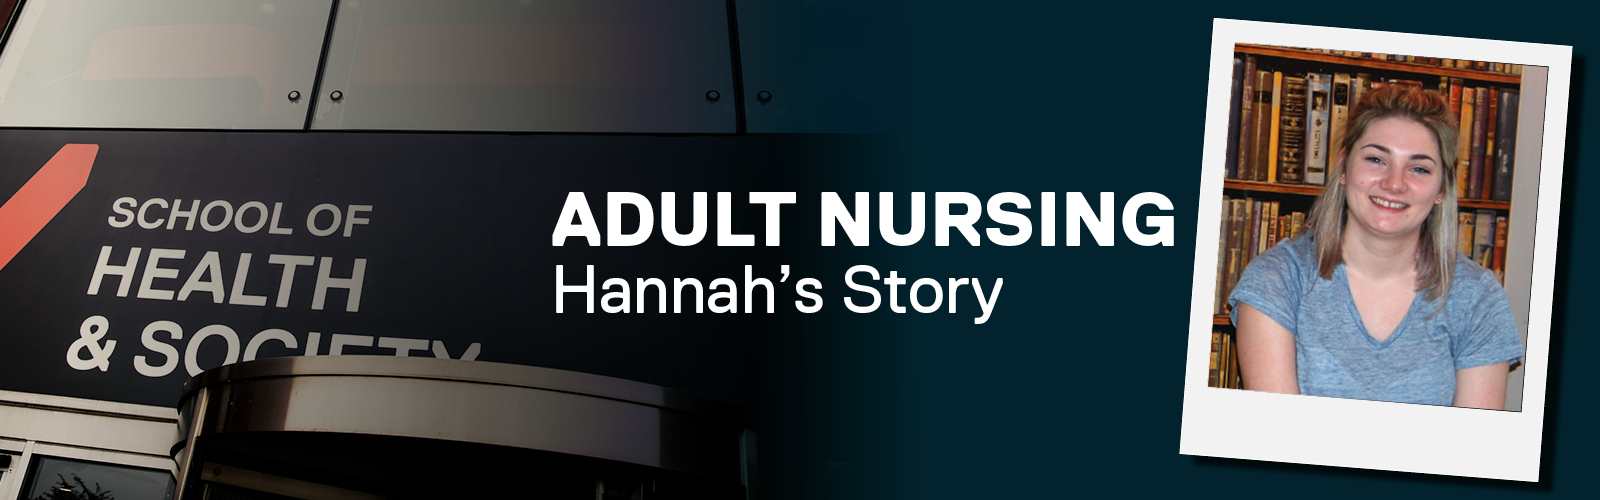 Adult Nursing Blog Image - Hannah's story